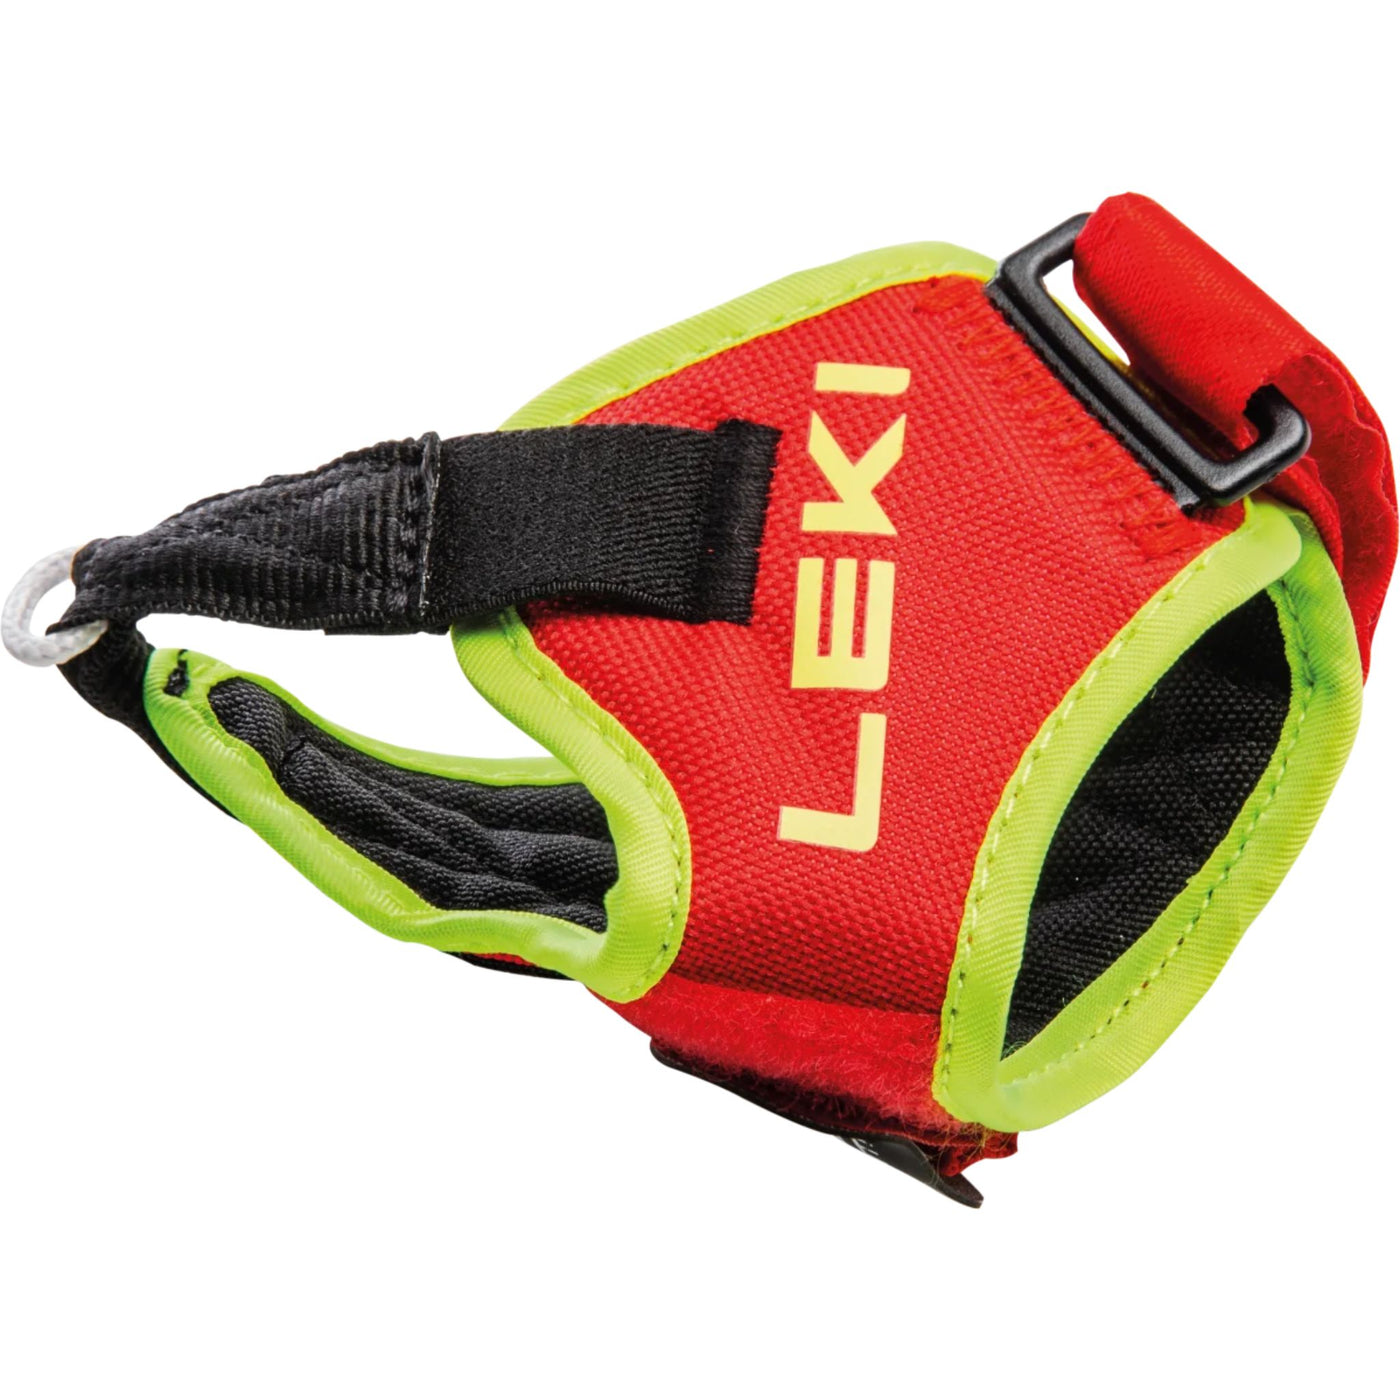 Leki Trigger S Frame Strap - One Size Fits All SKI POLES Leki Red  